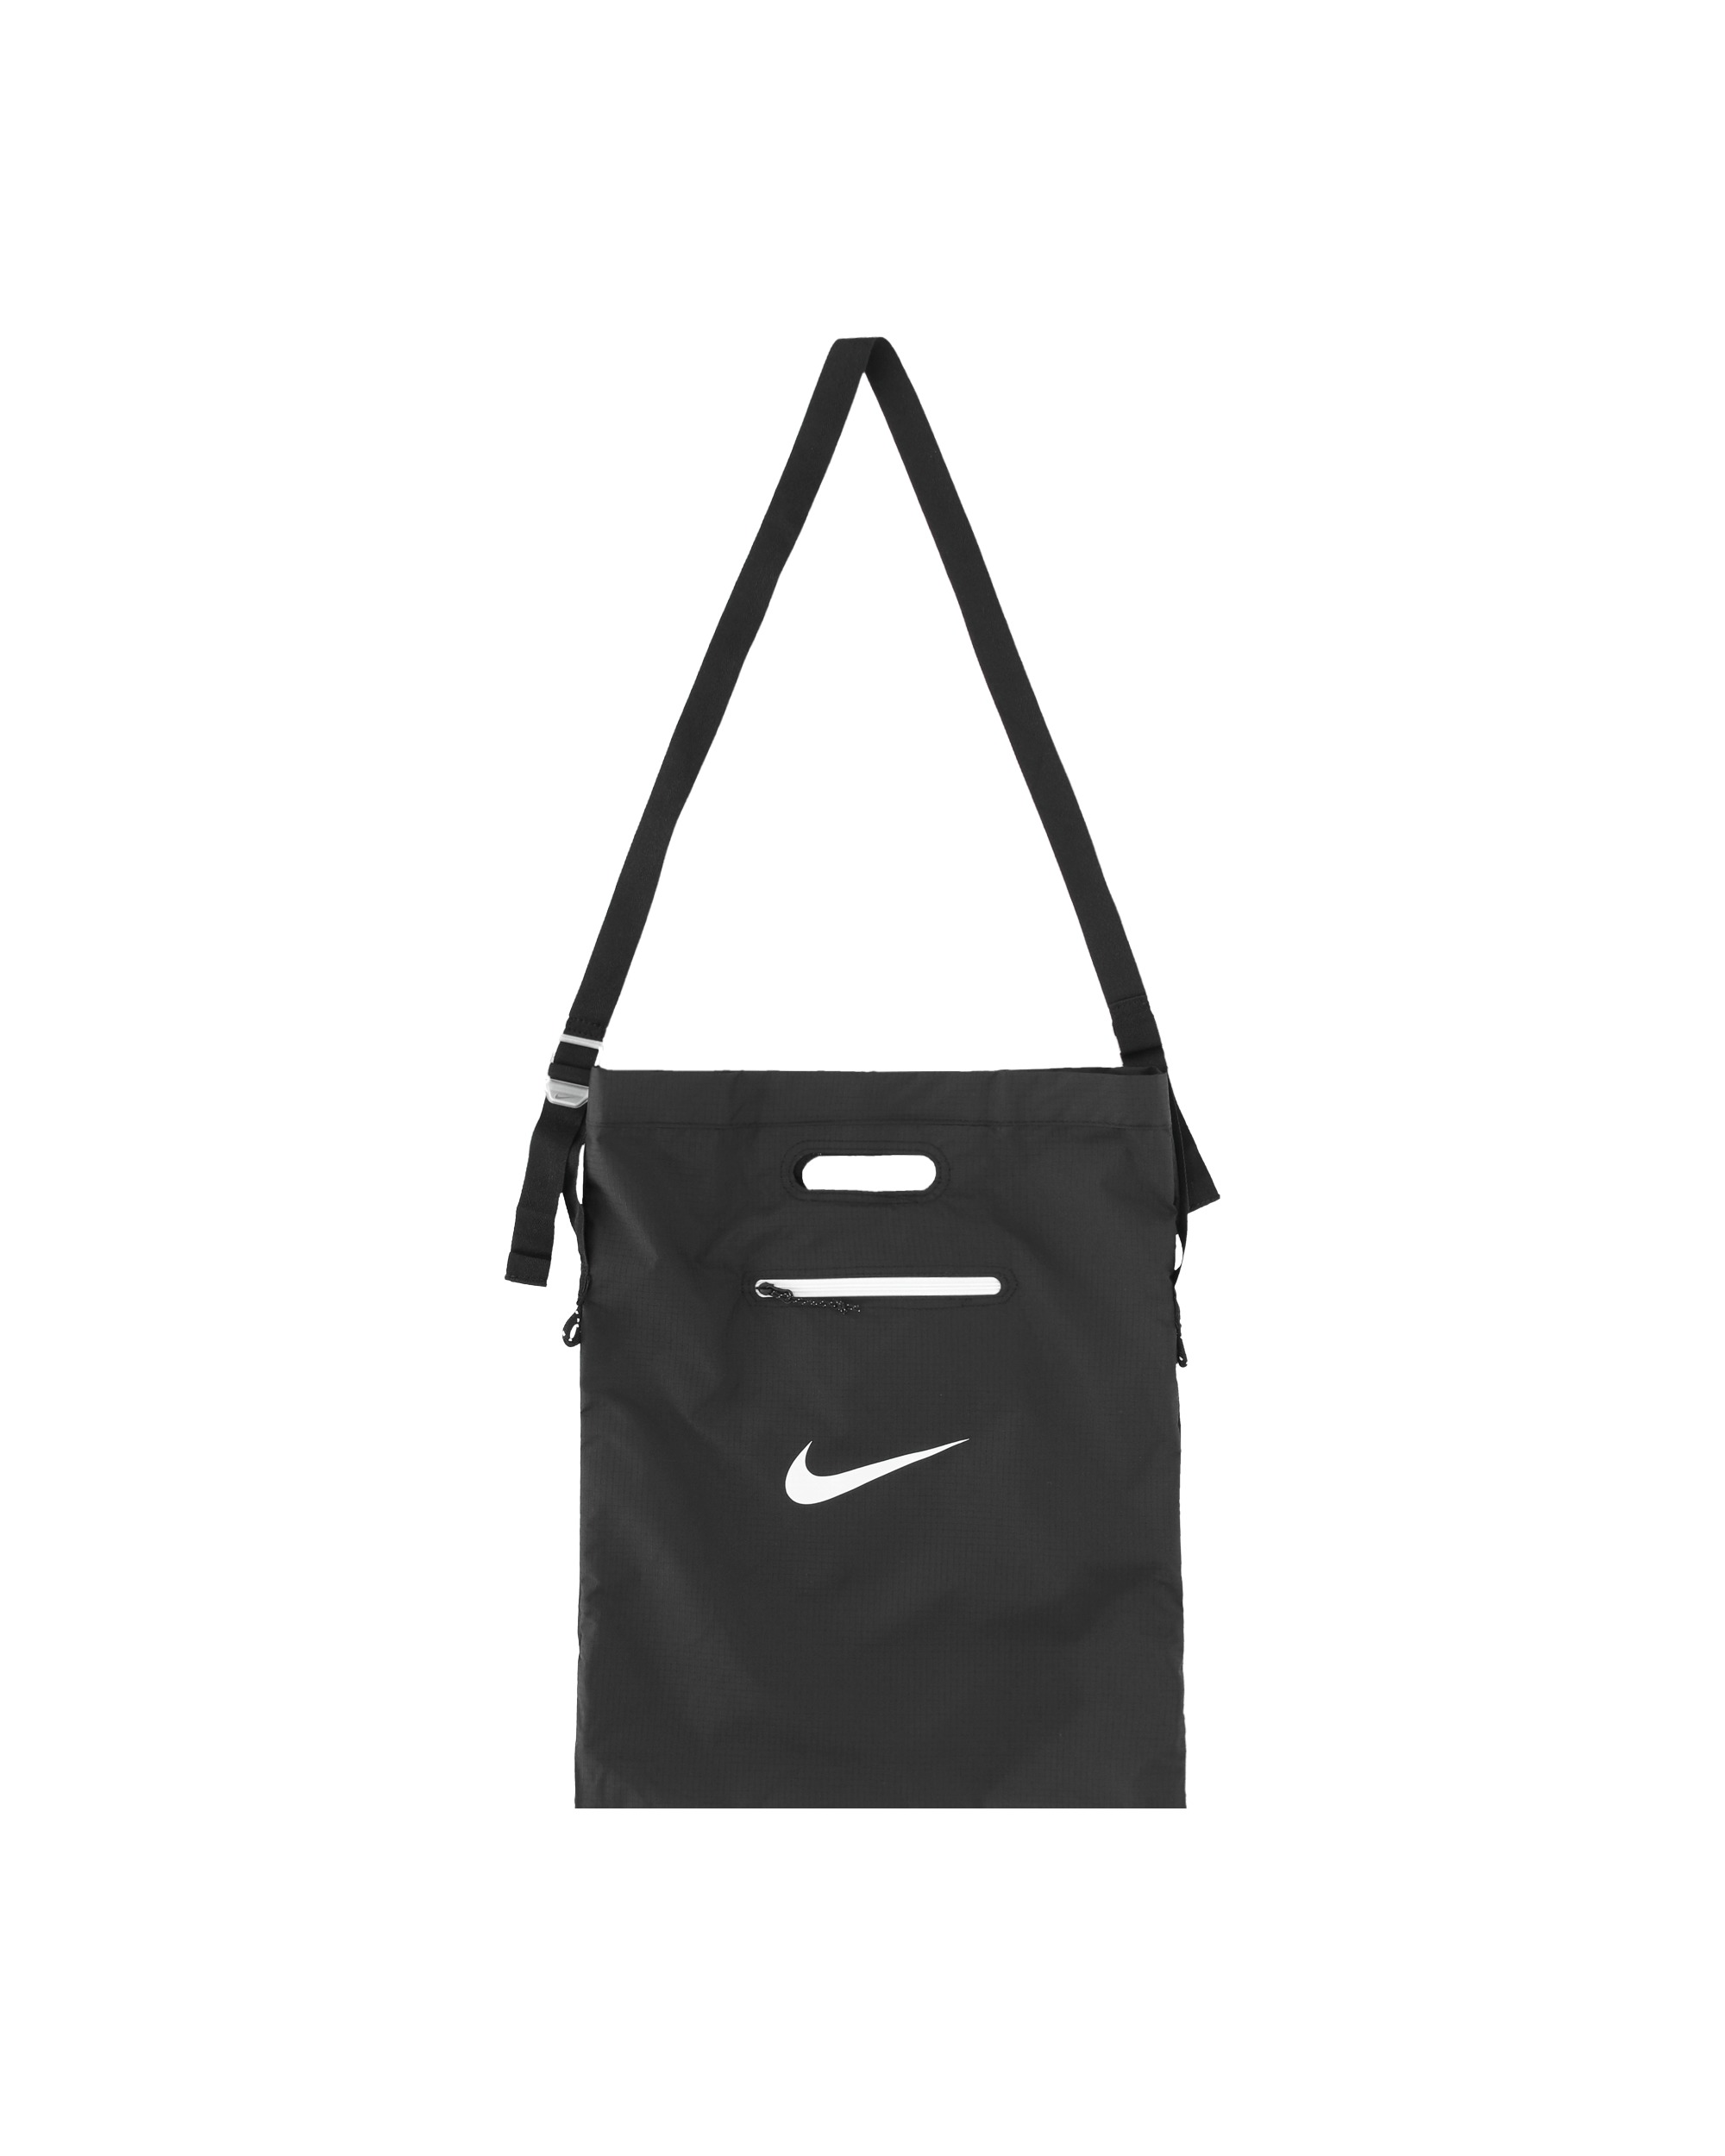 Stash Tote Bag Black / Nike